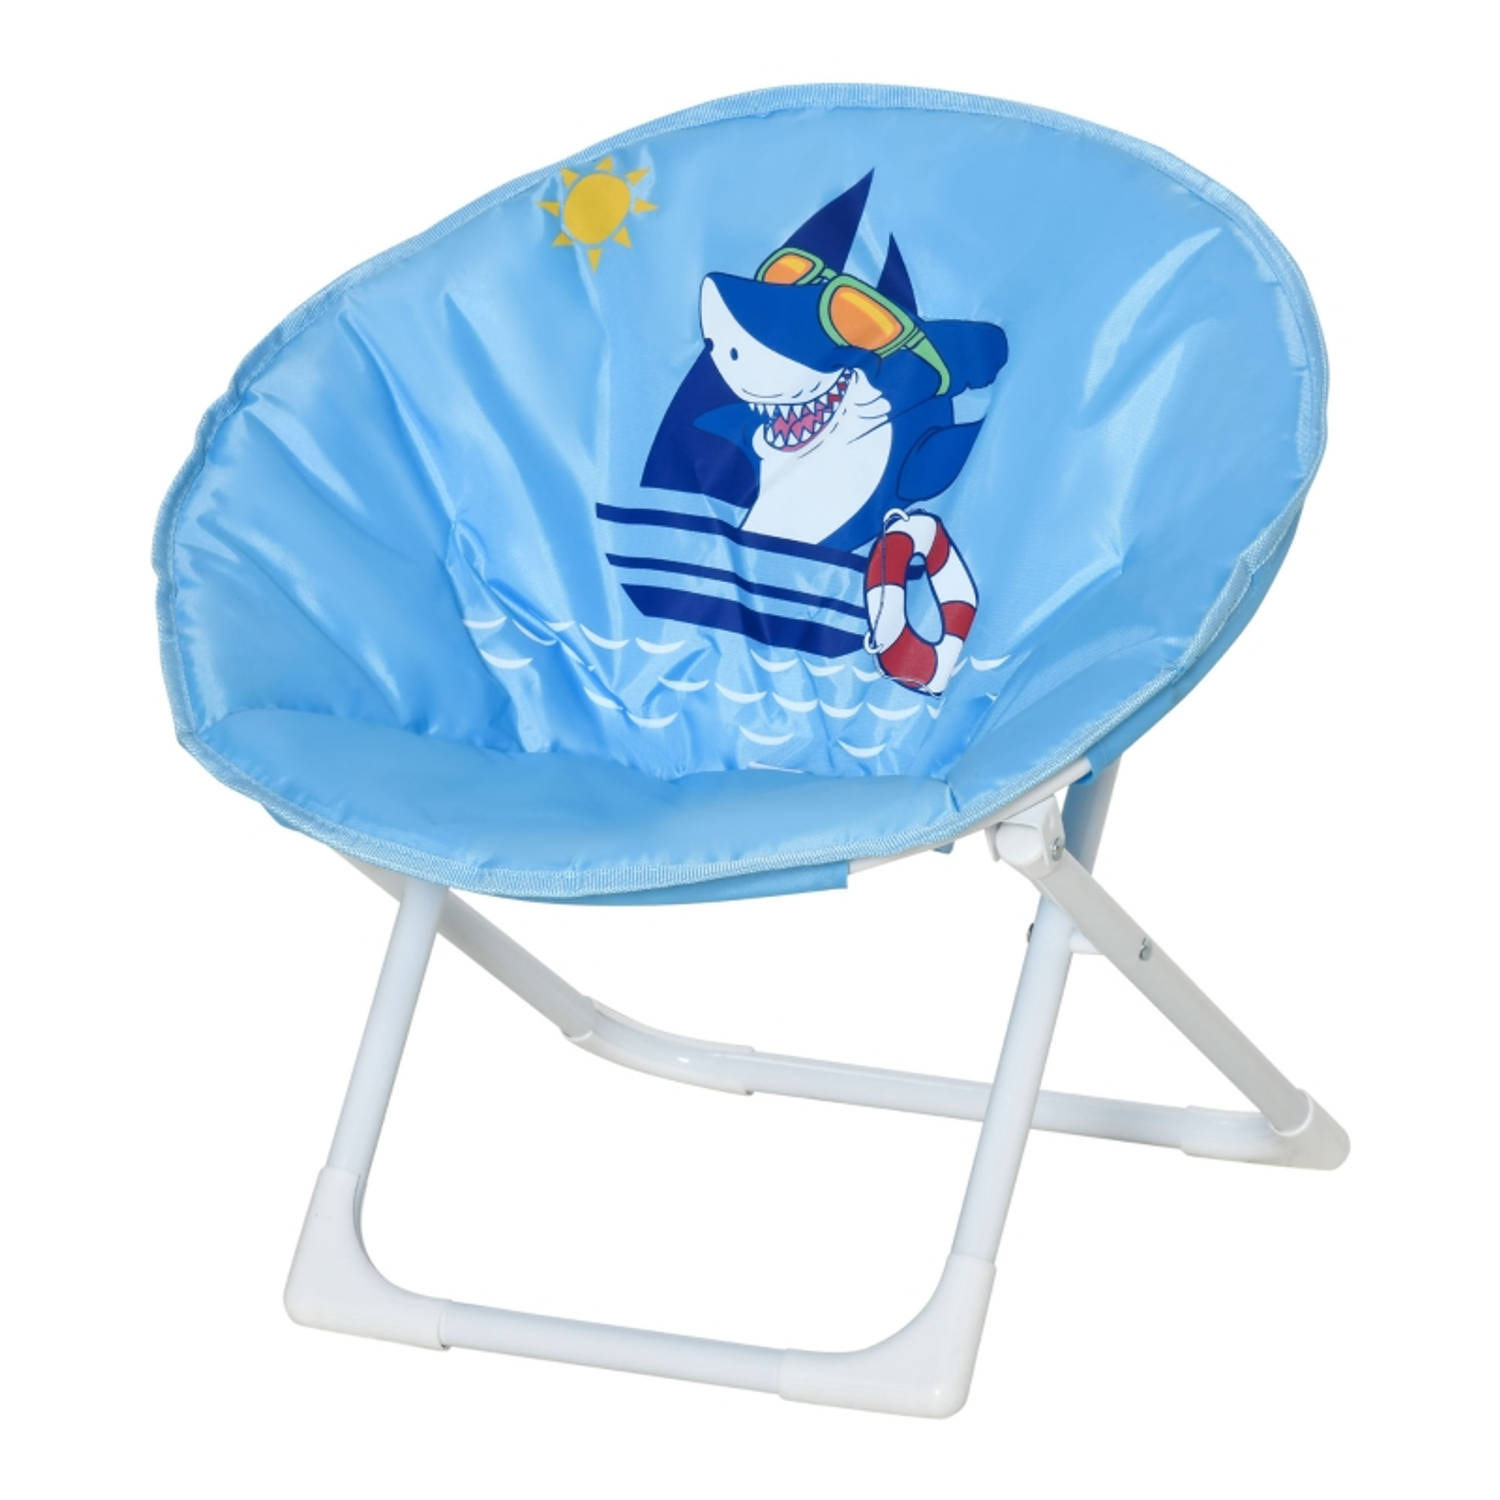 Vouwstoel Kind Campingstoel Kinderstoel Blauw Ø50 X 49h Cm